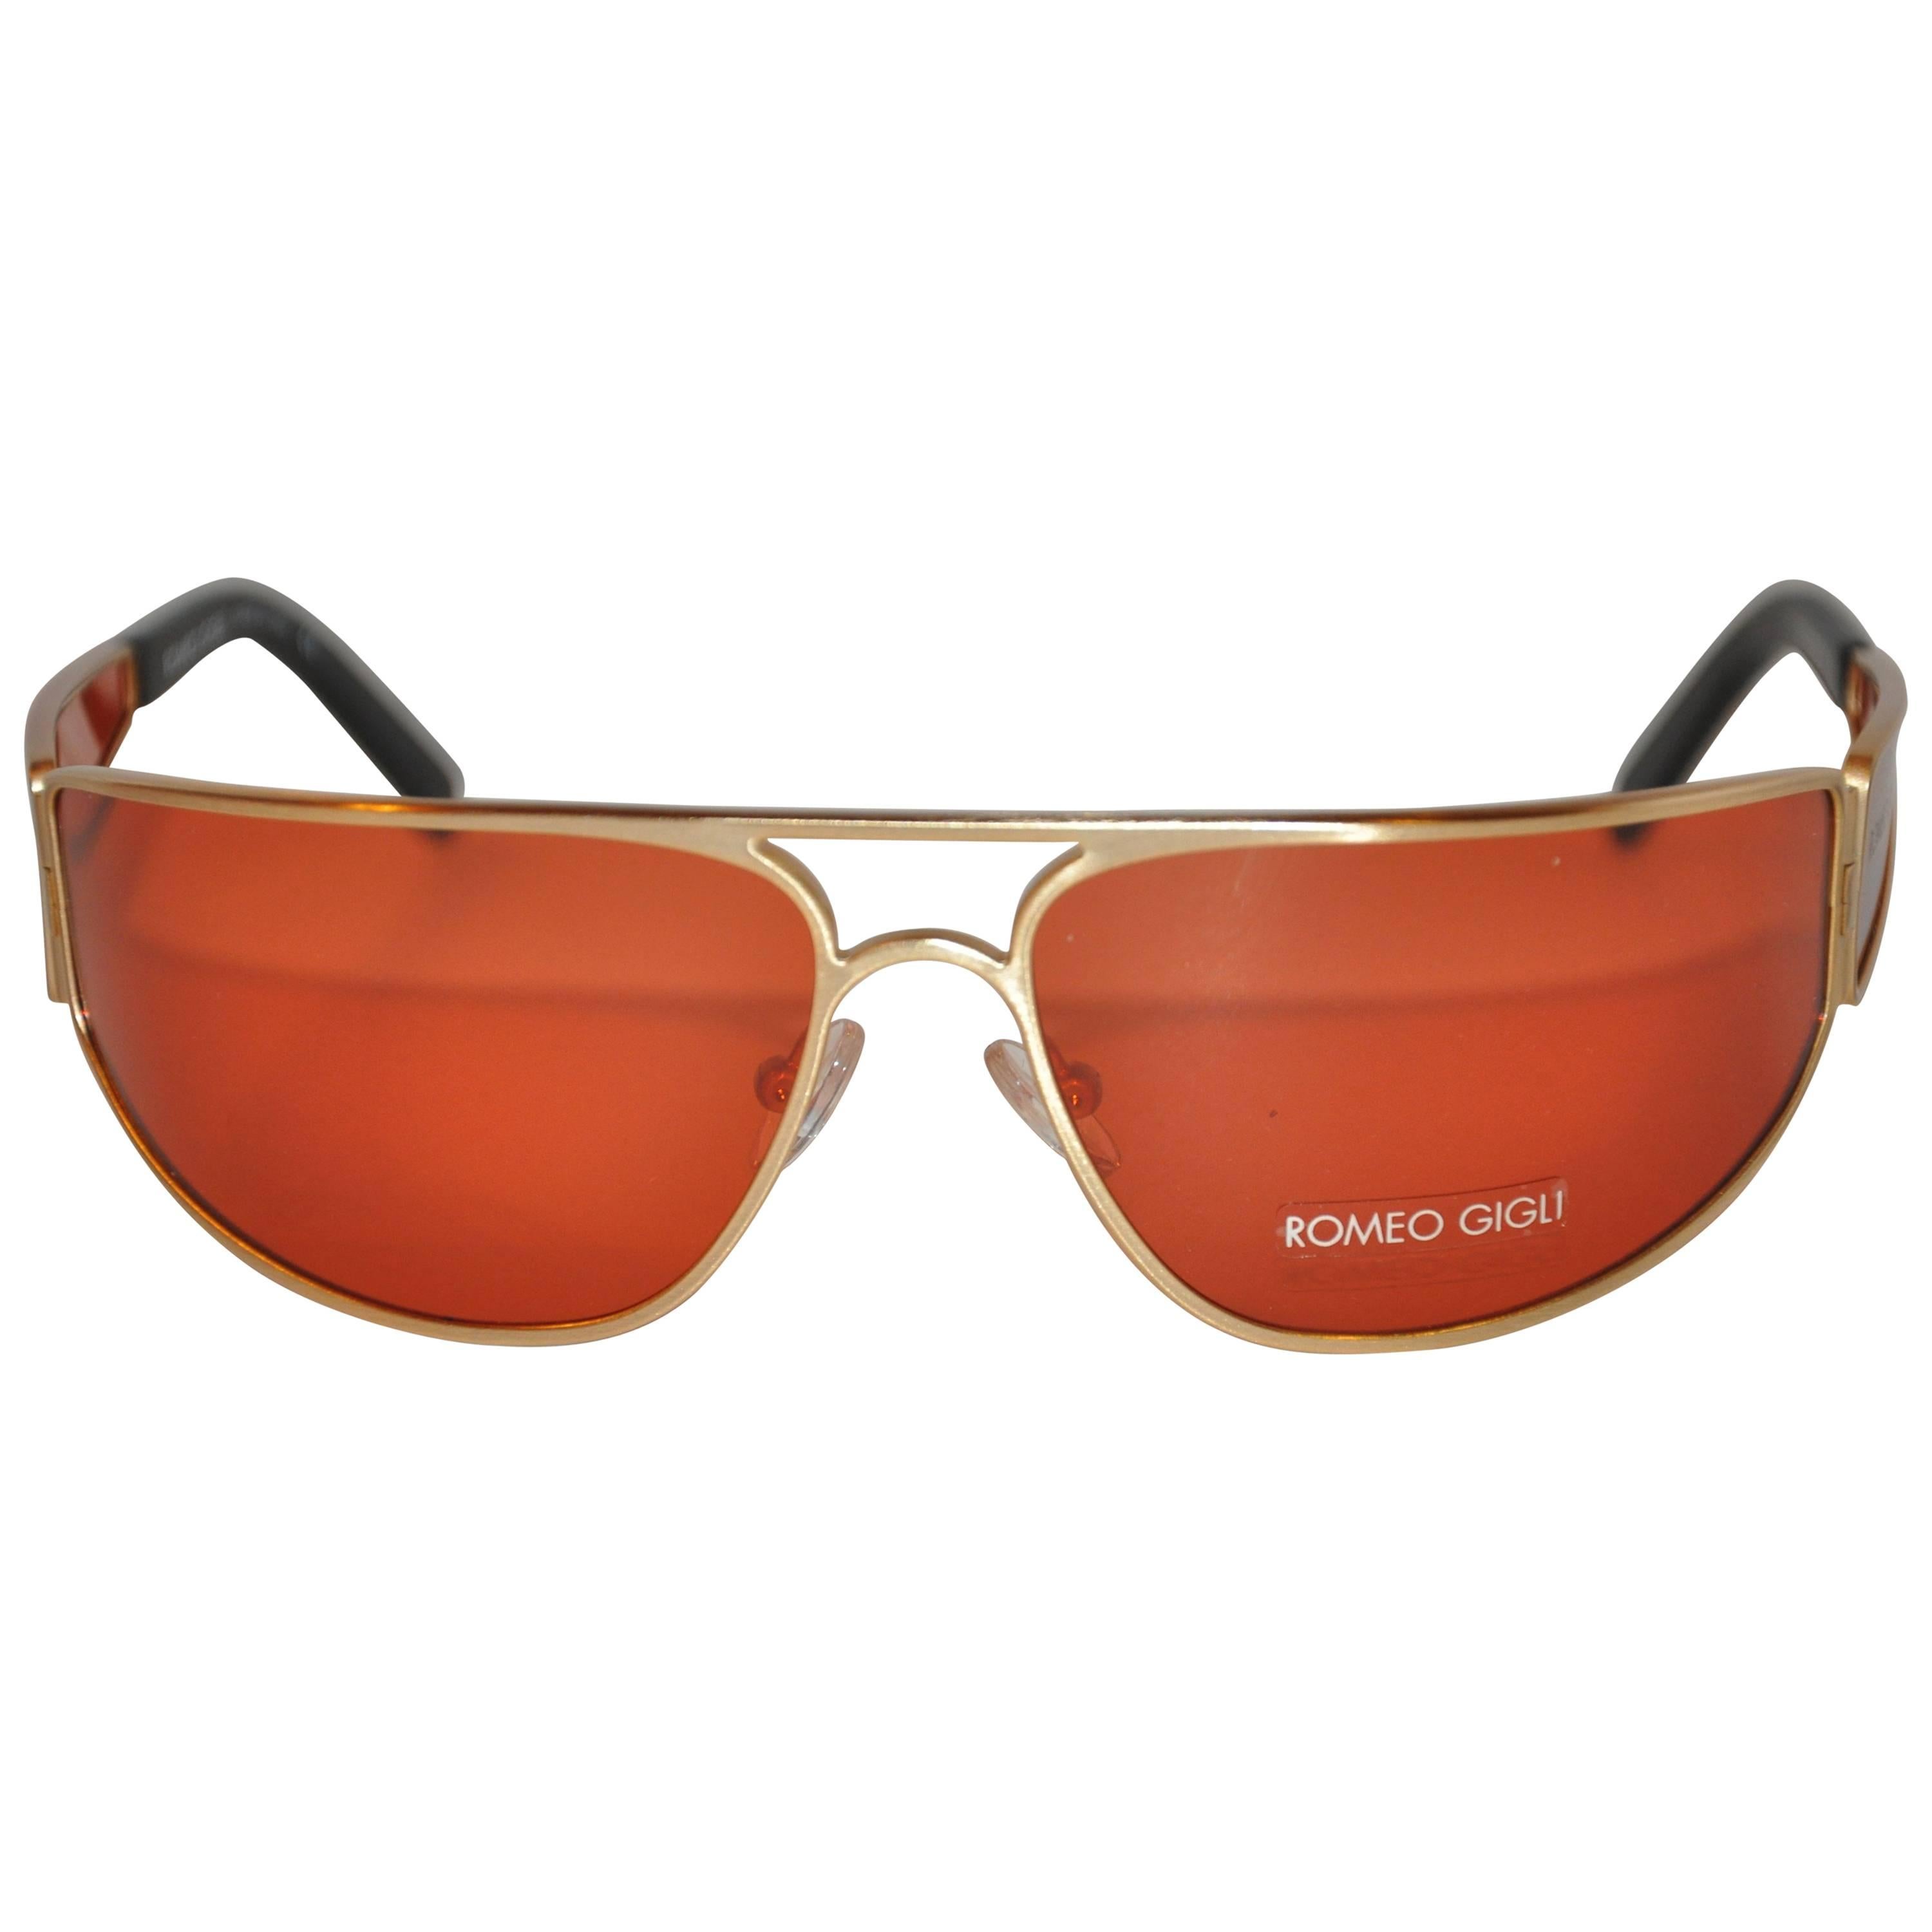 Romeo Gigli Gold Hardware Wraparound Sunglasses